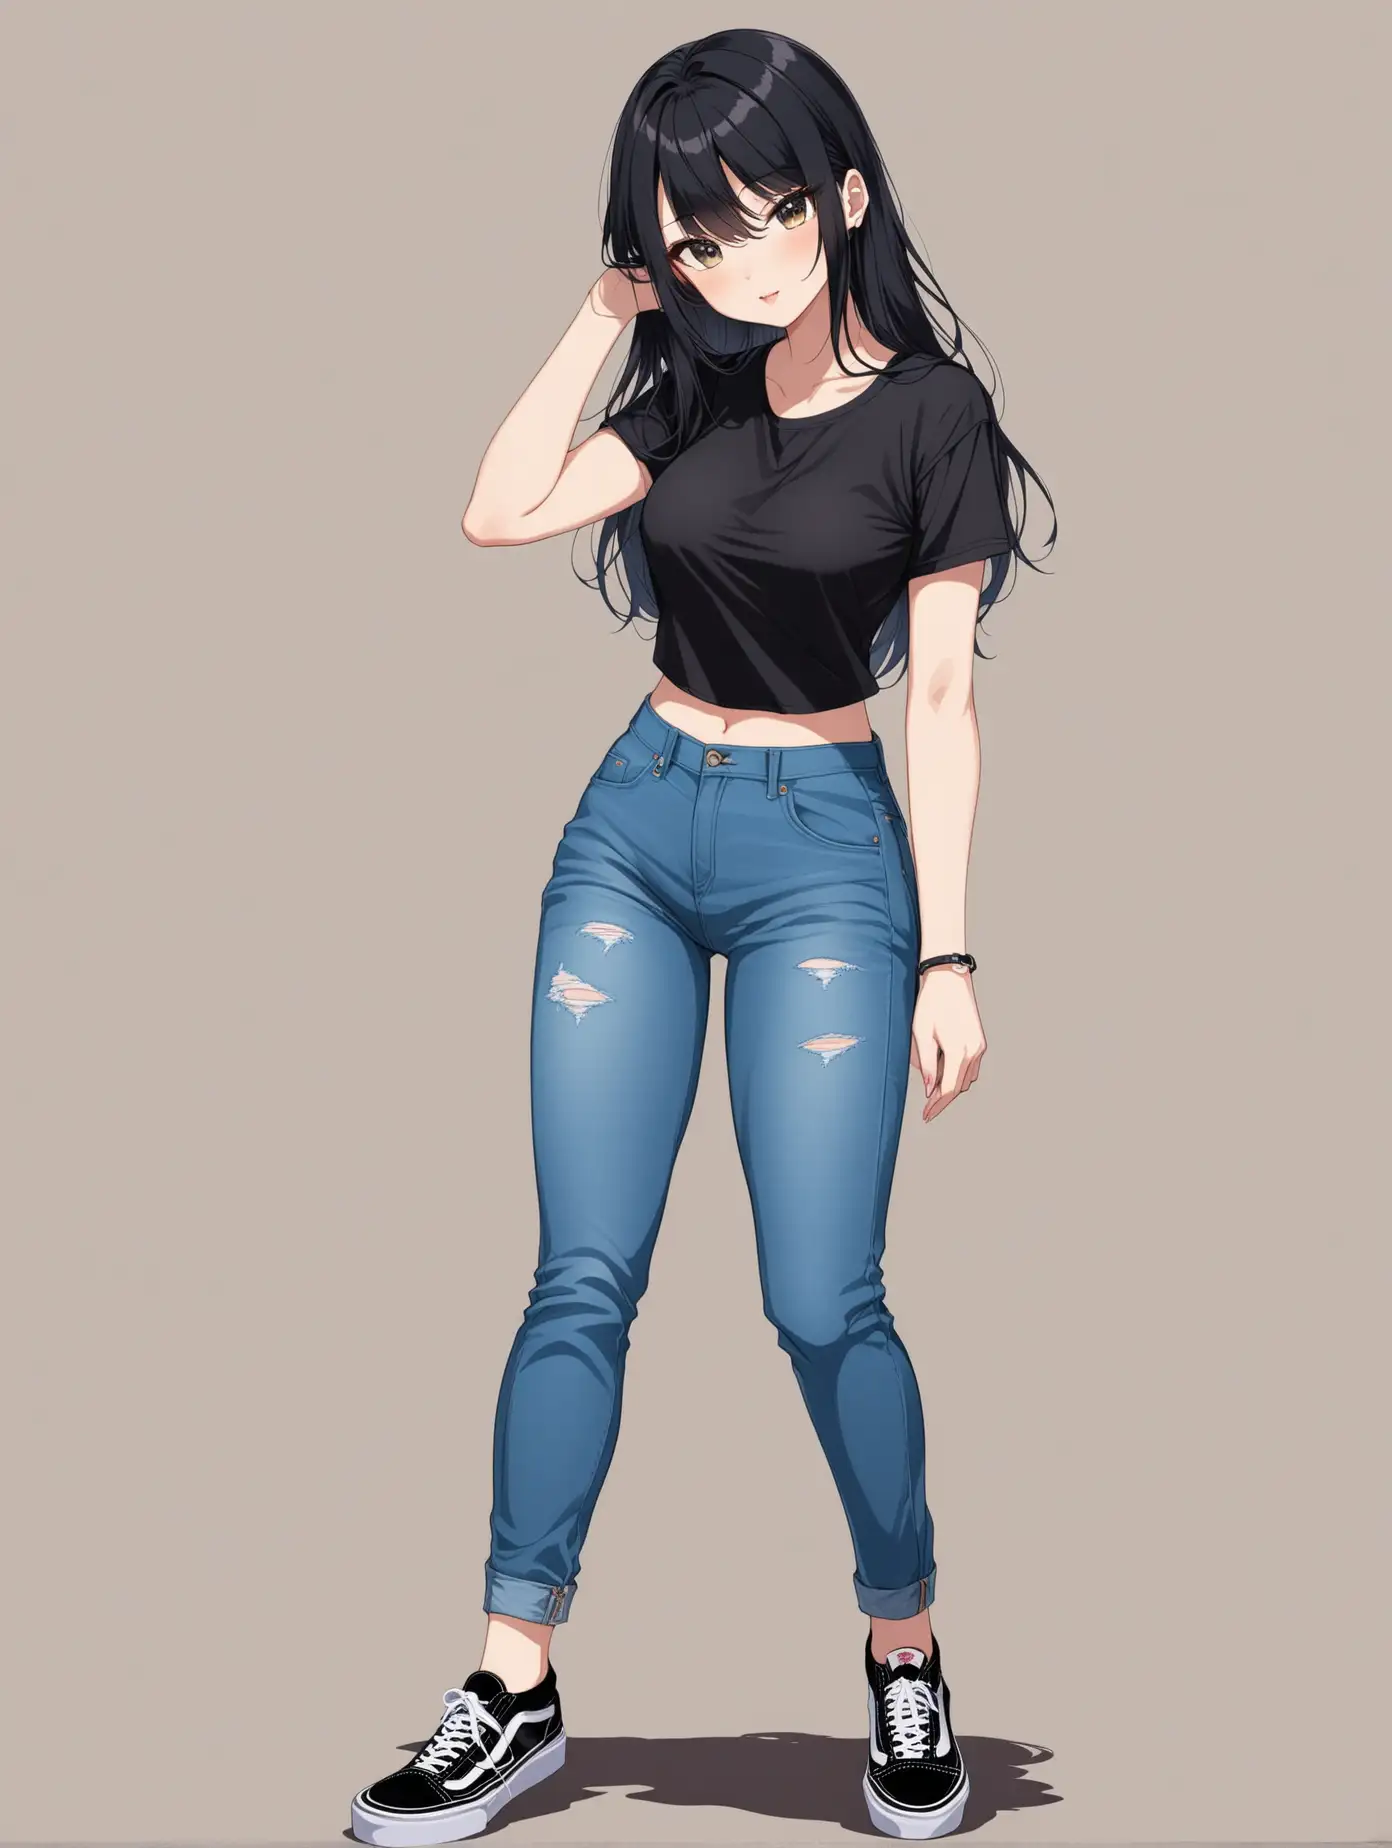 Sensual-Anime-Woman-in-Jeans-and-Vans-Sneakers-Black-Hair-Beauty